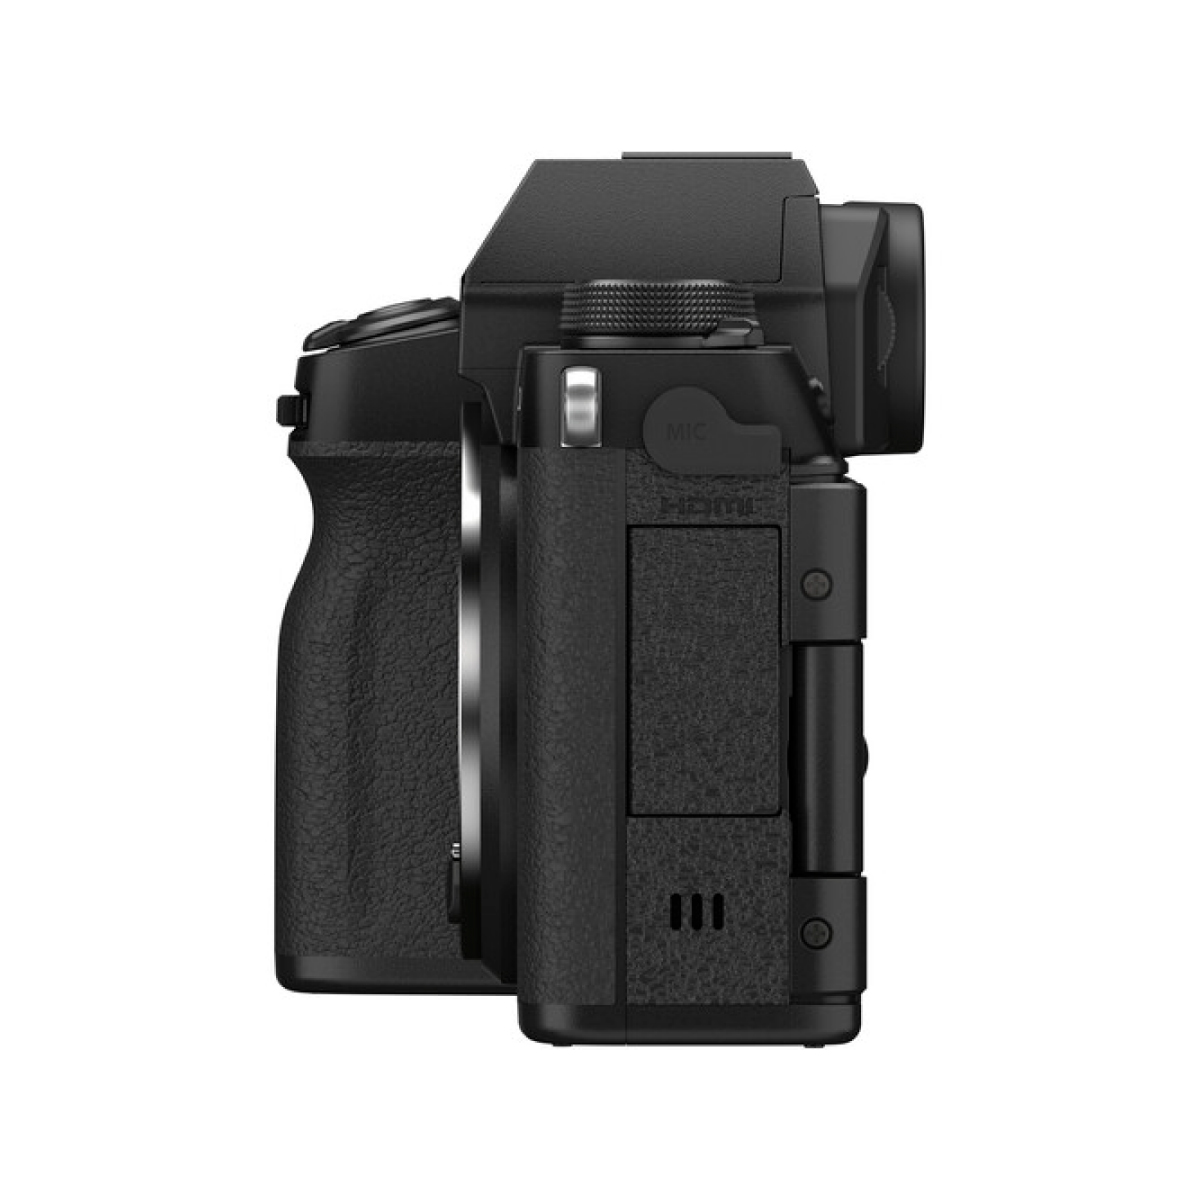 Fujifilm X-S10 Mirrorless Camera Body – Black (6)